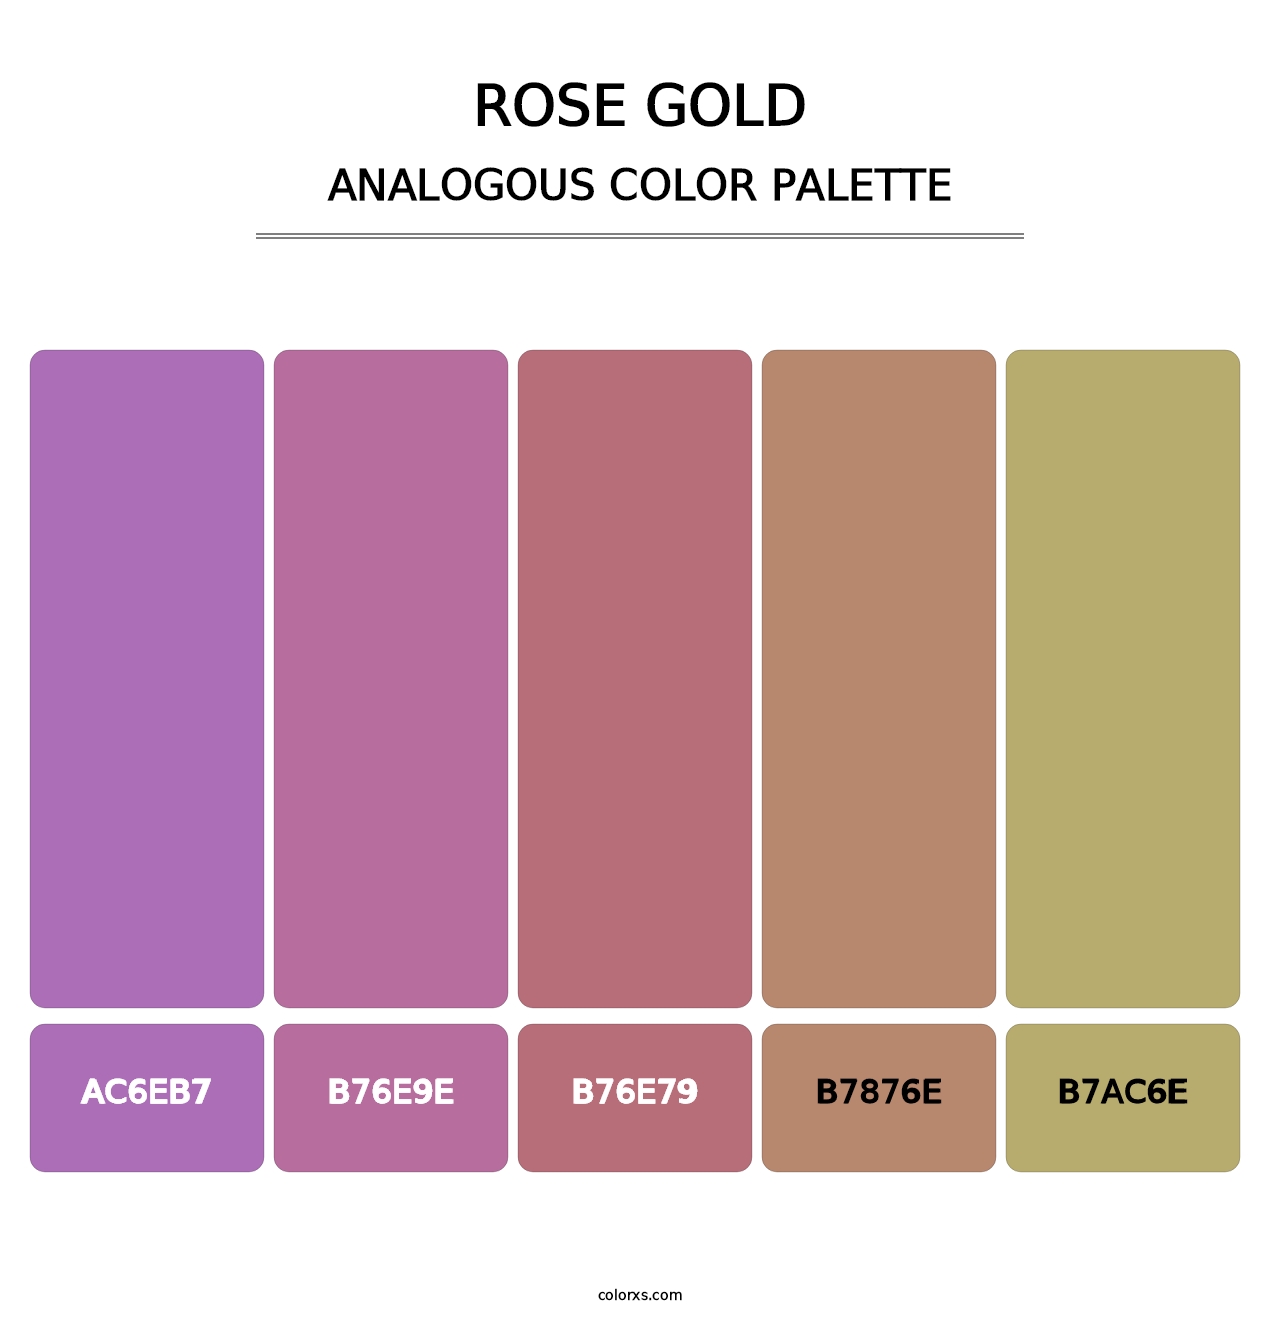 Rose Gold - Analogous Color Palette